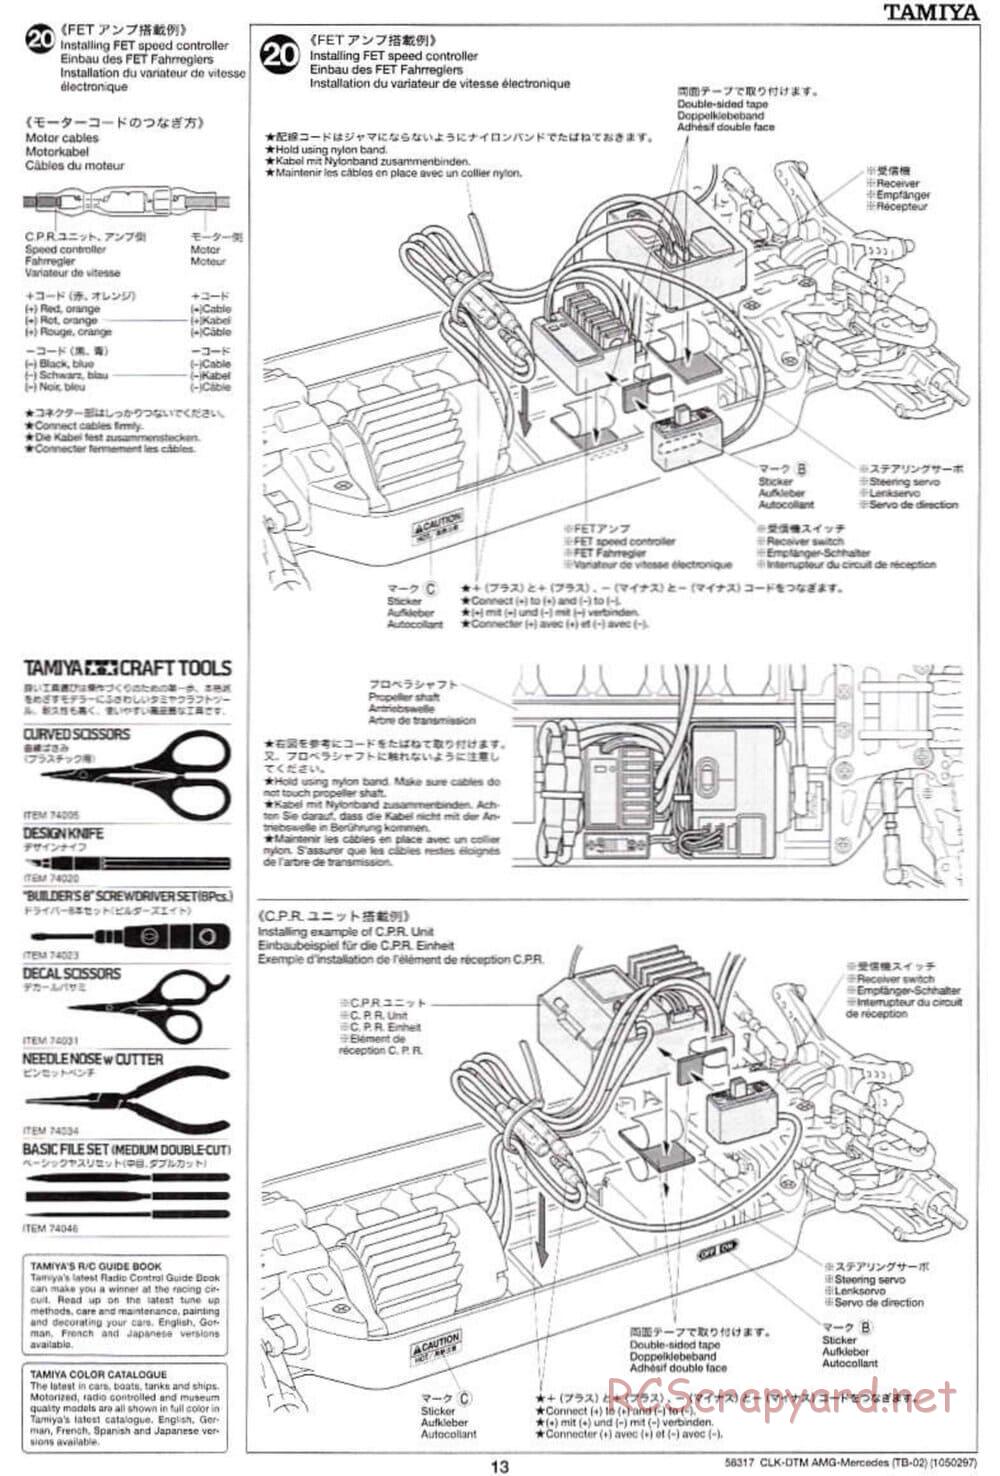 Tamiya - CLK DTM 2002 AMG Mercedes - TB-02 Chassis - Manual - Page 13